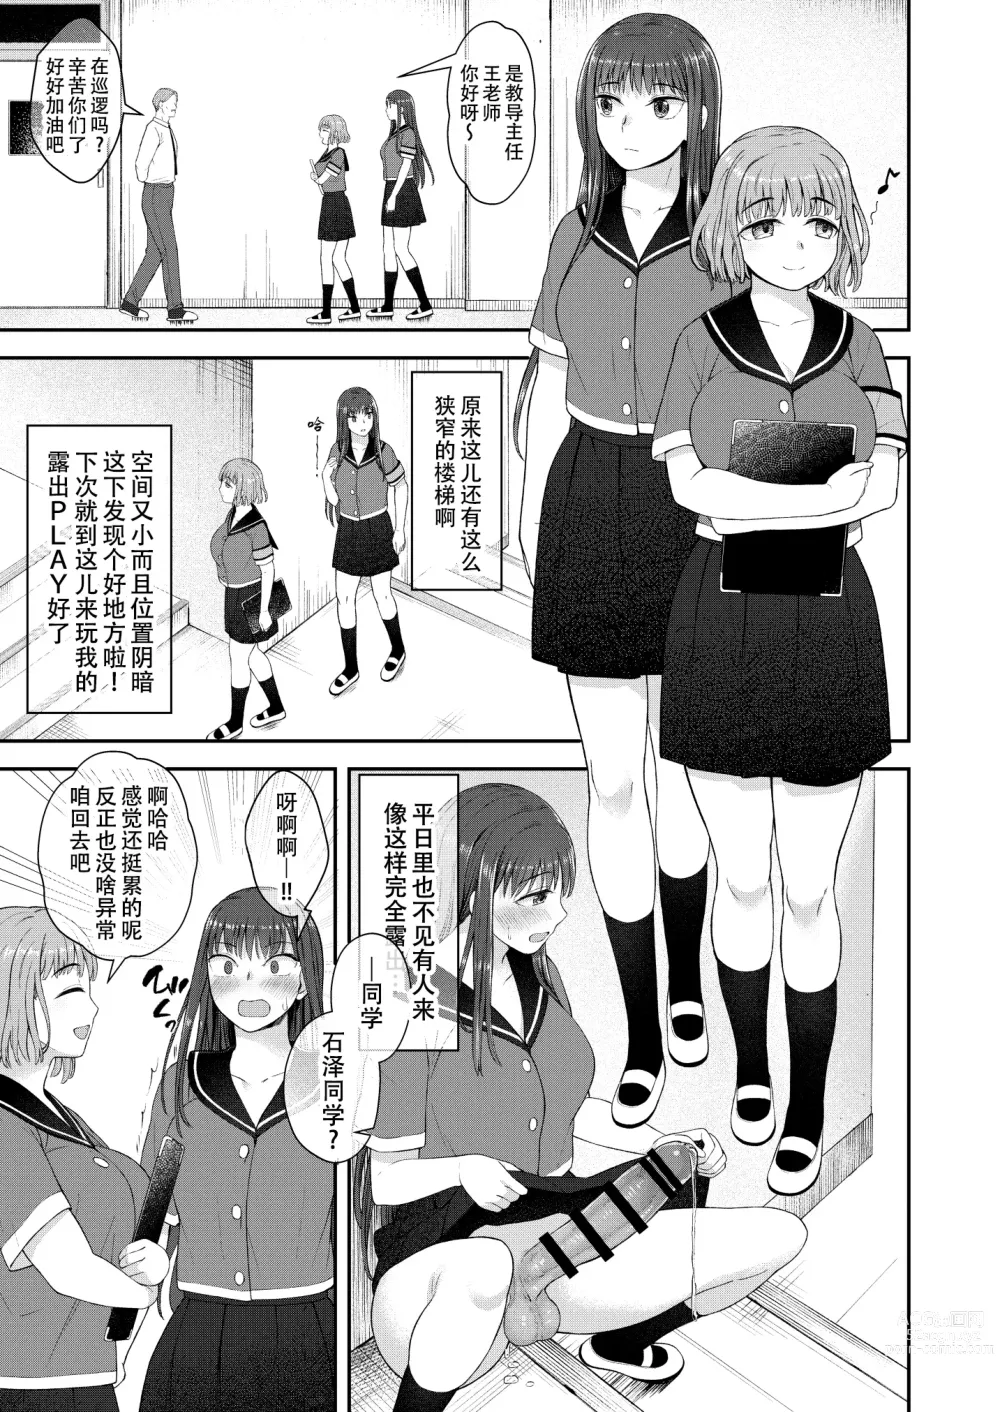 Page 7 of doujinshi 放课后的自拍少女2 那个露出男性性器并且自拍的变态只有她知道其真面目.